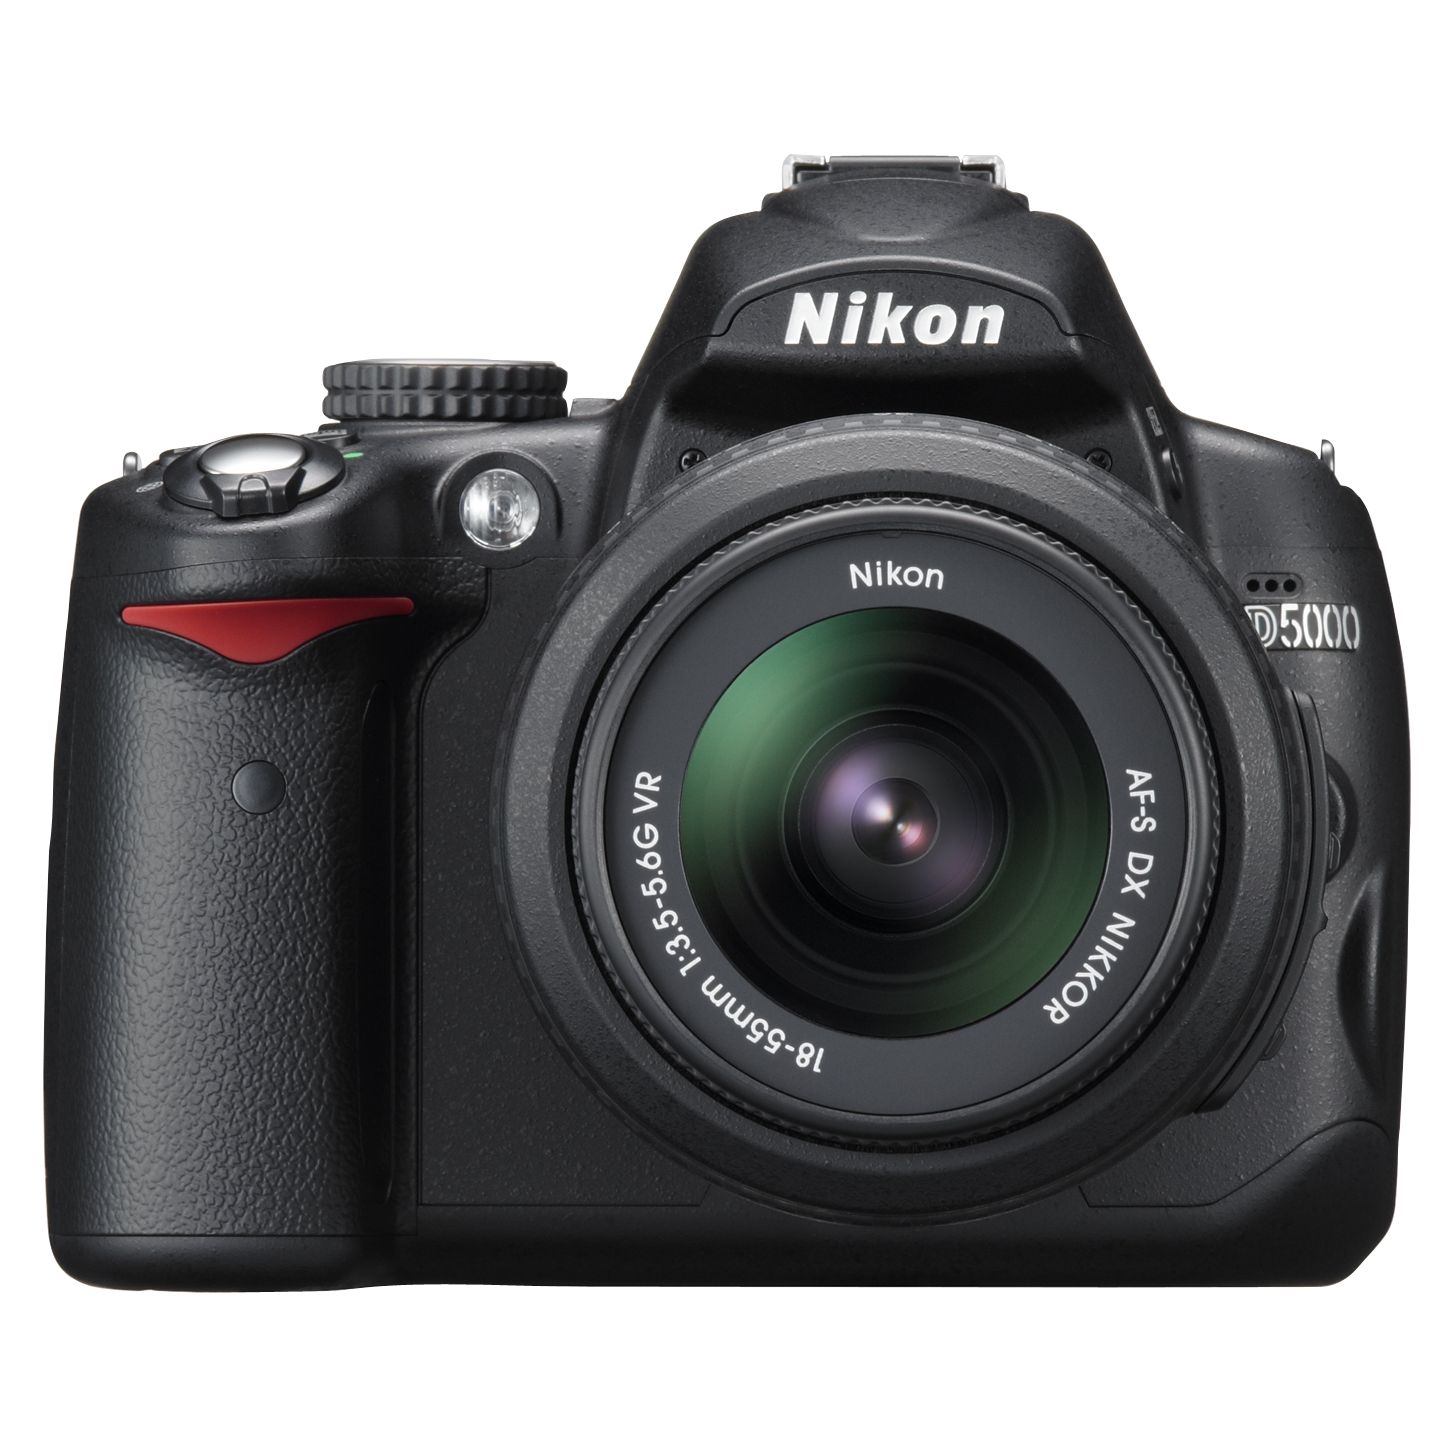 Nikon D5000 Digital SLR Camera with 18-55mm VR Lens at John Lewis